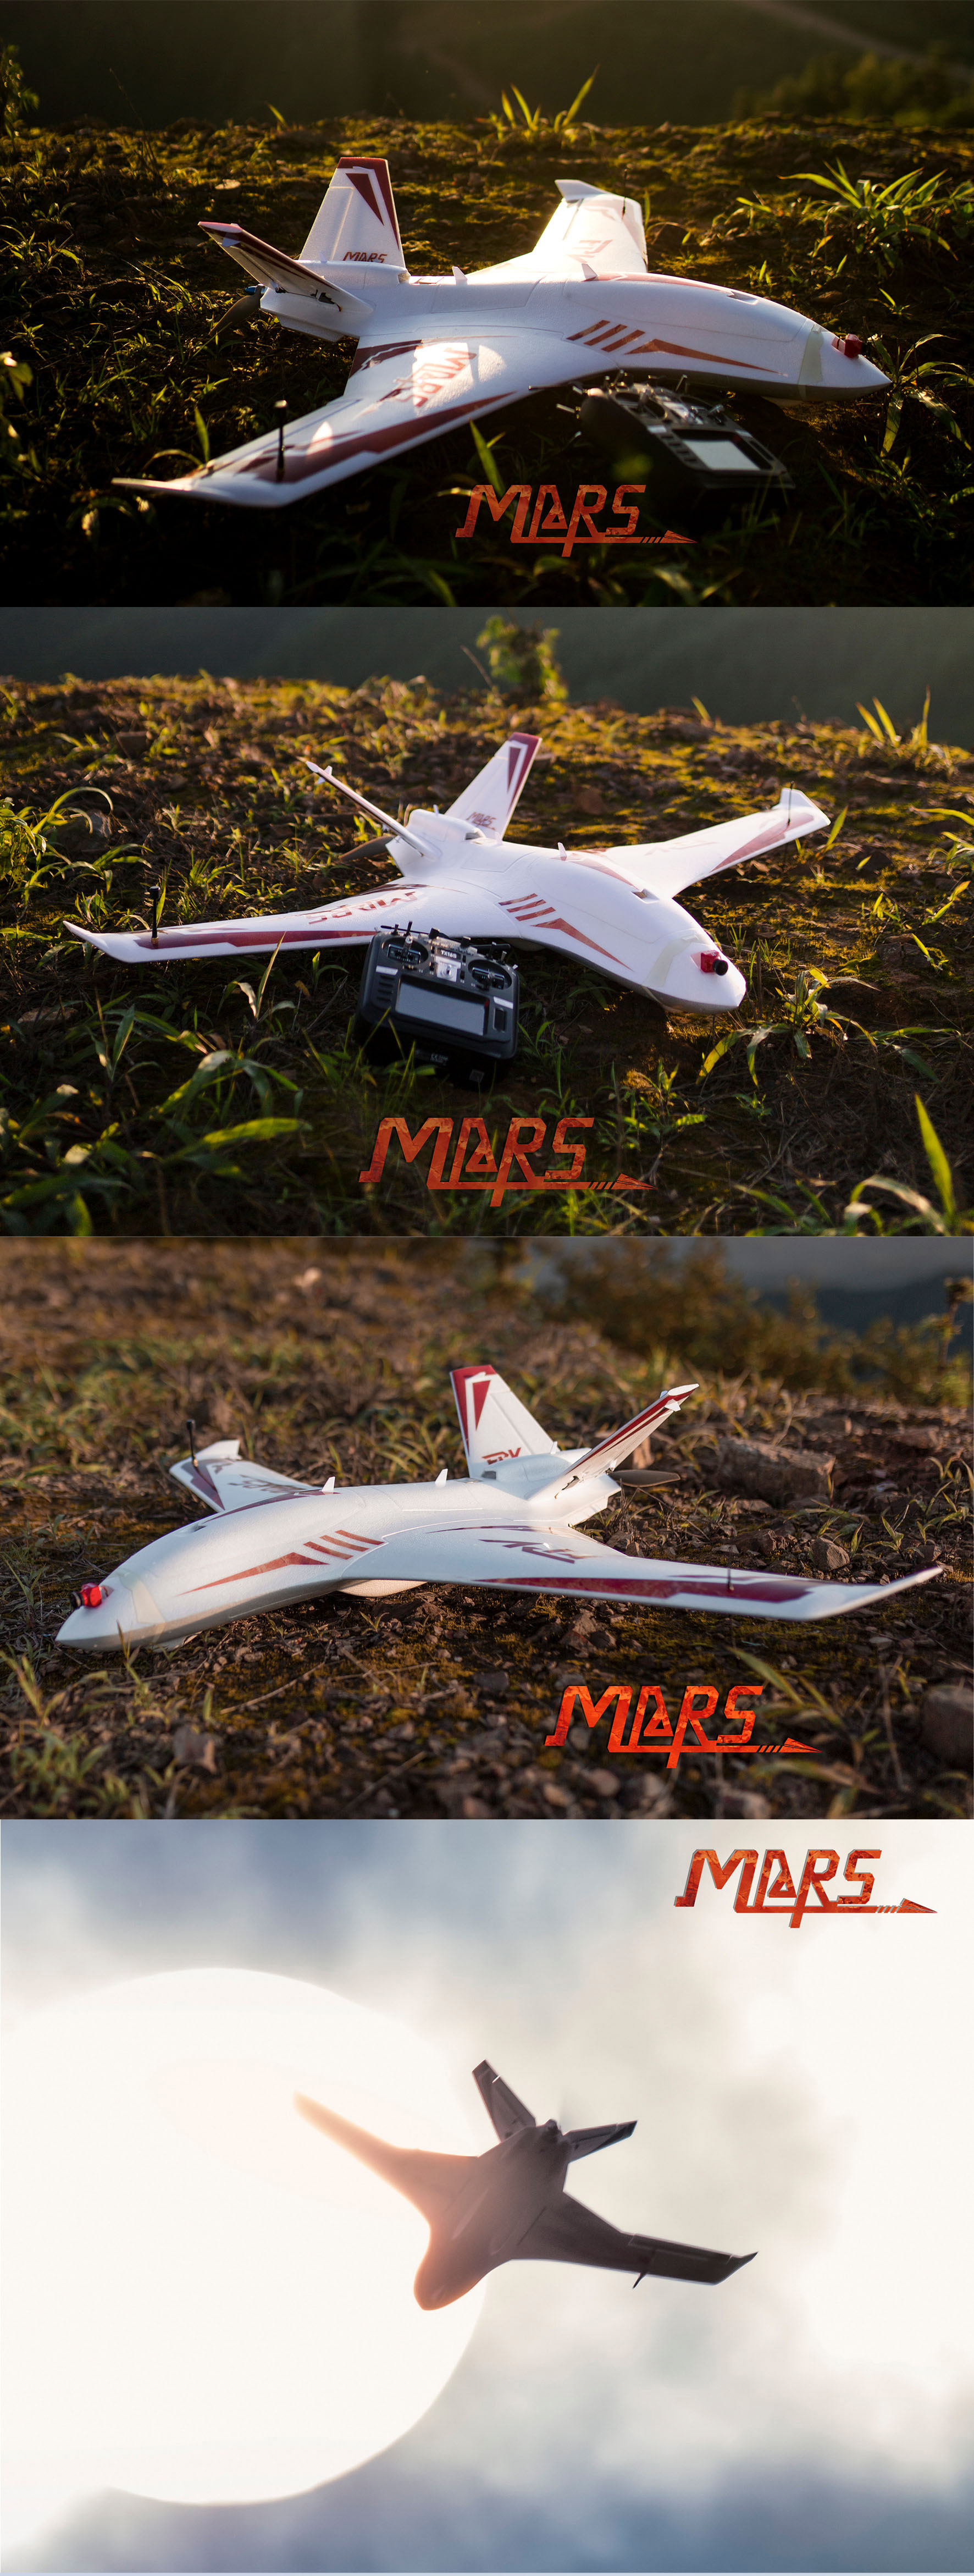 MARS-1200mm-Wingspan-EPP-Quick-released-V-Tail-FPV-Flying-Wing-RC-Airplane-KITPNP-1883831-2